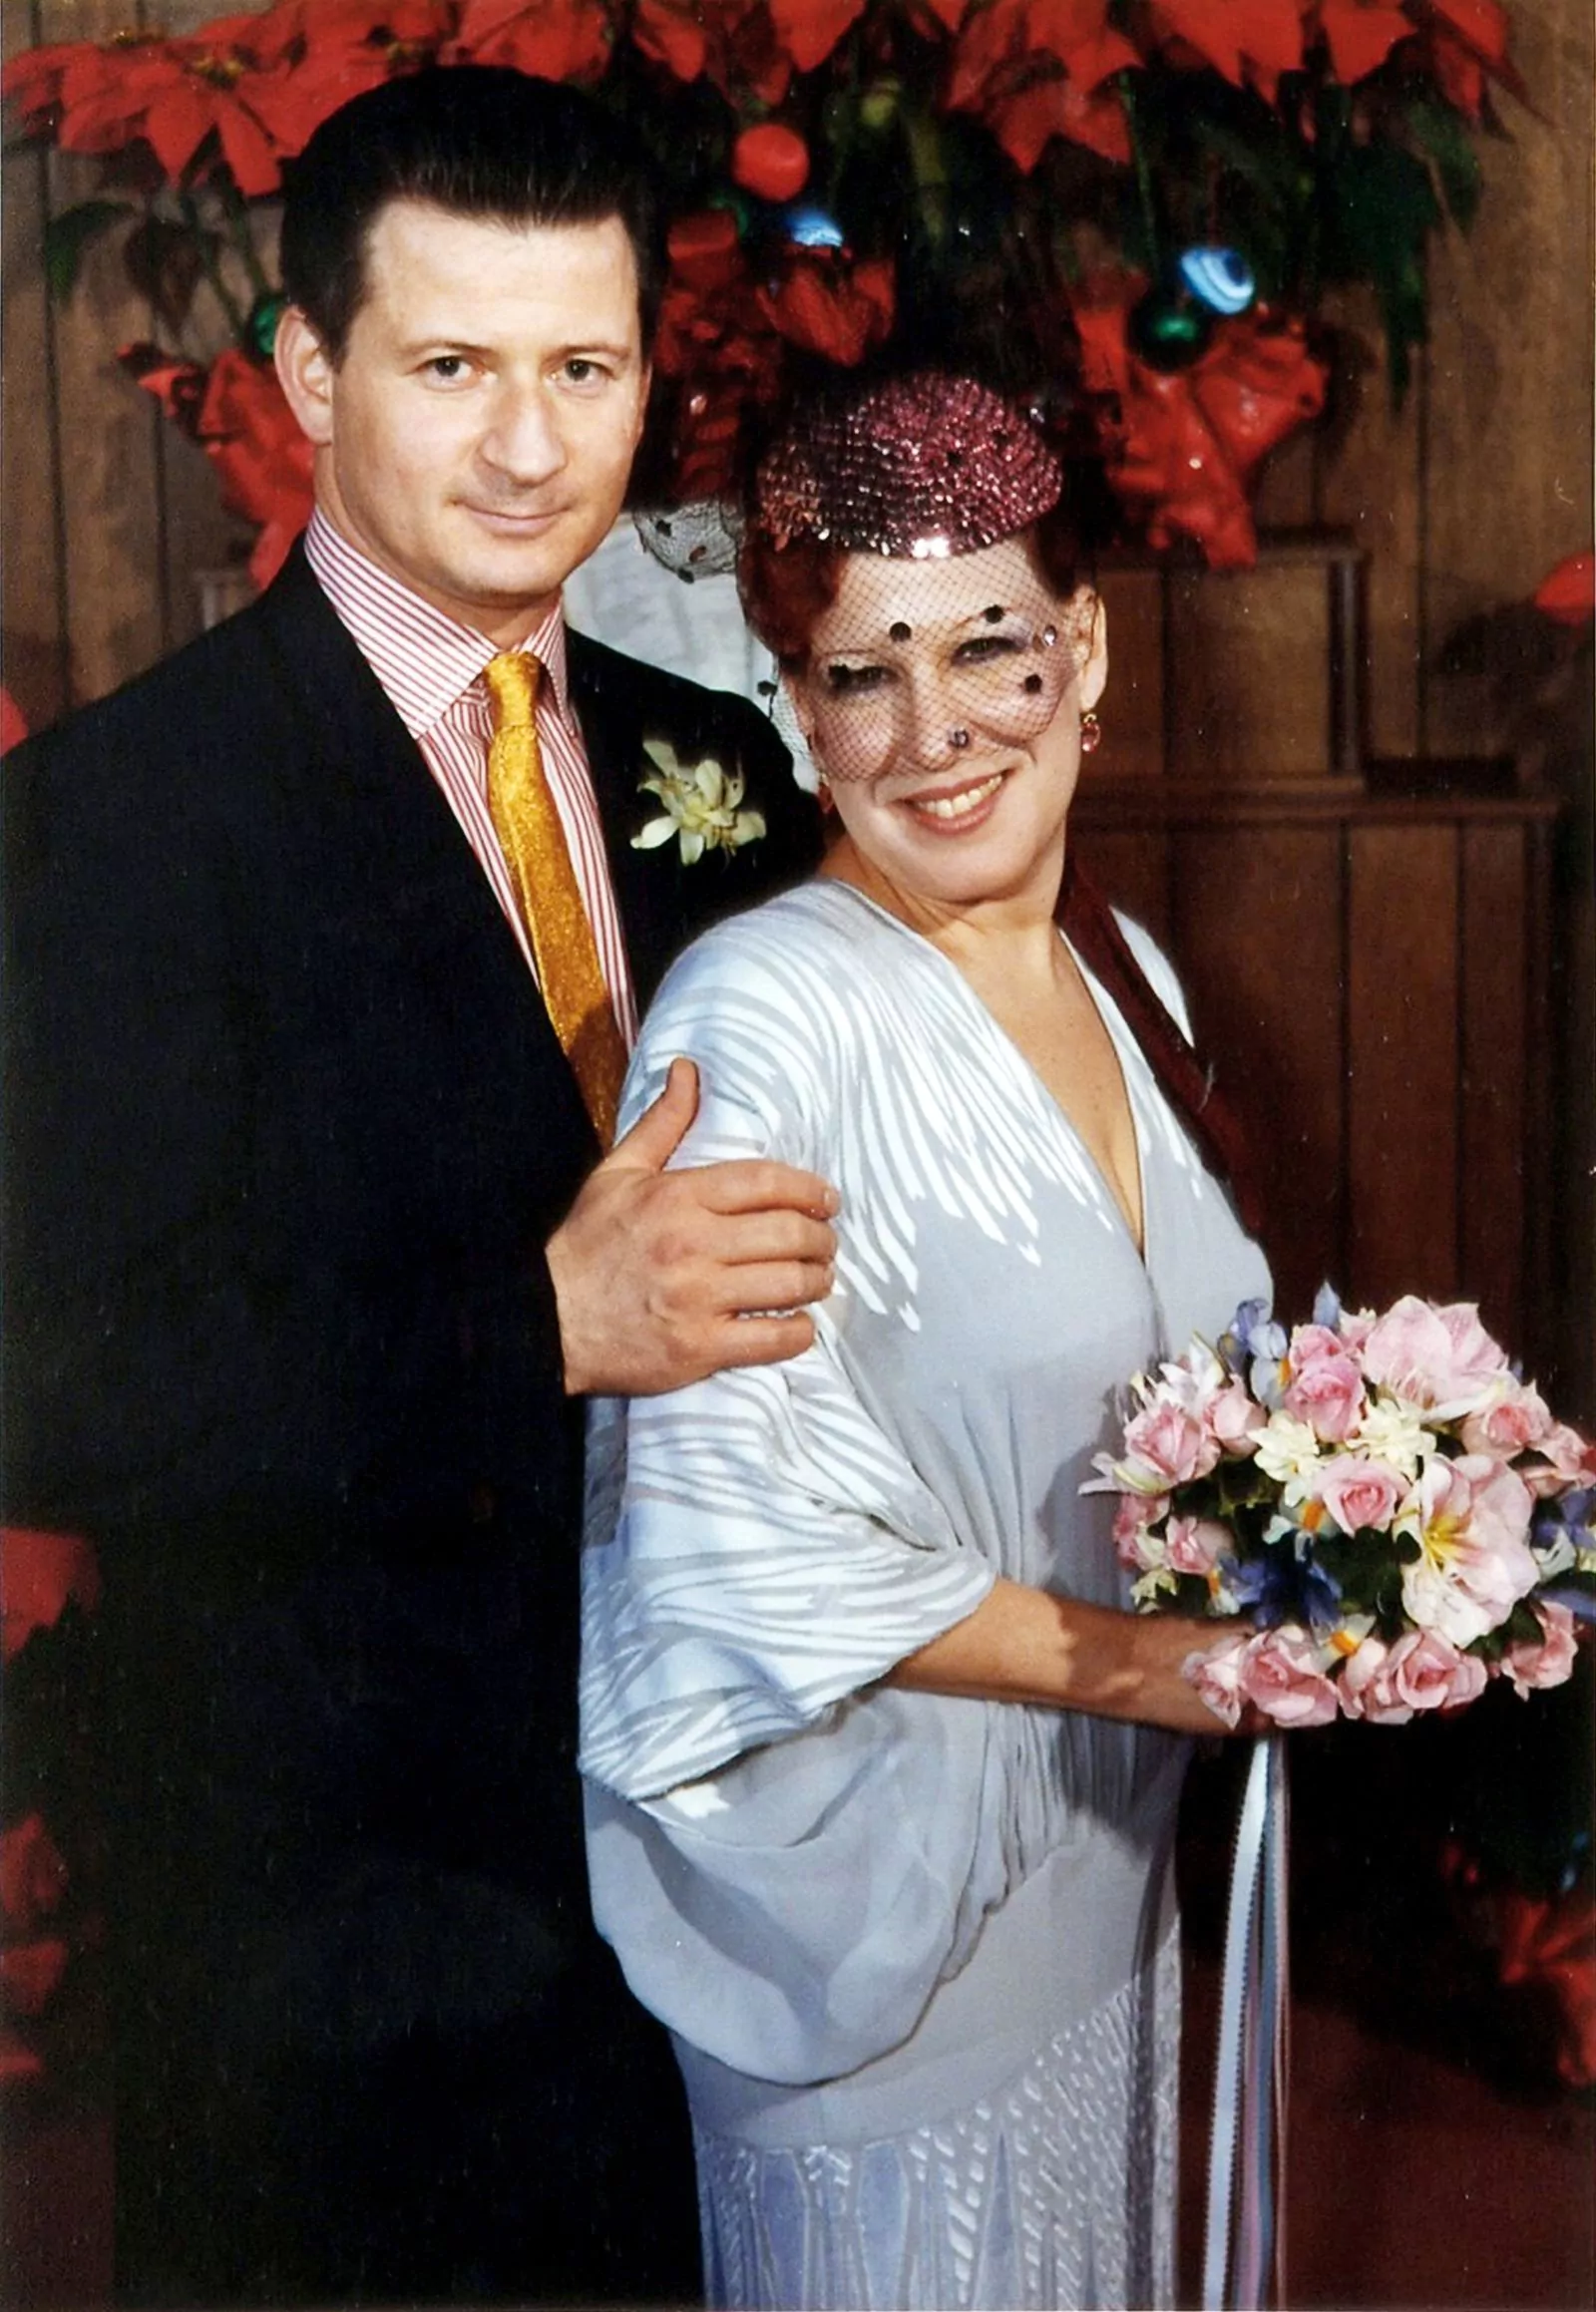 Wedding of Bette Midler and Martin von Haselberg, 1984